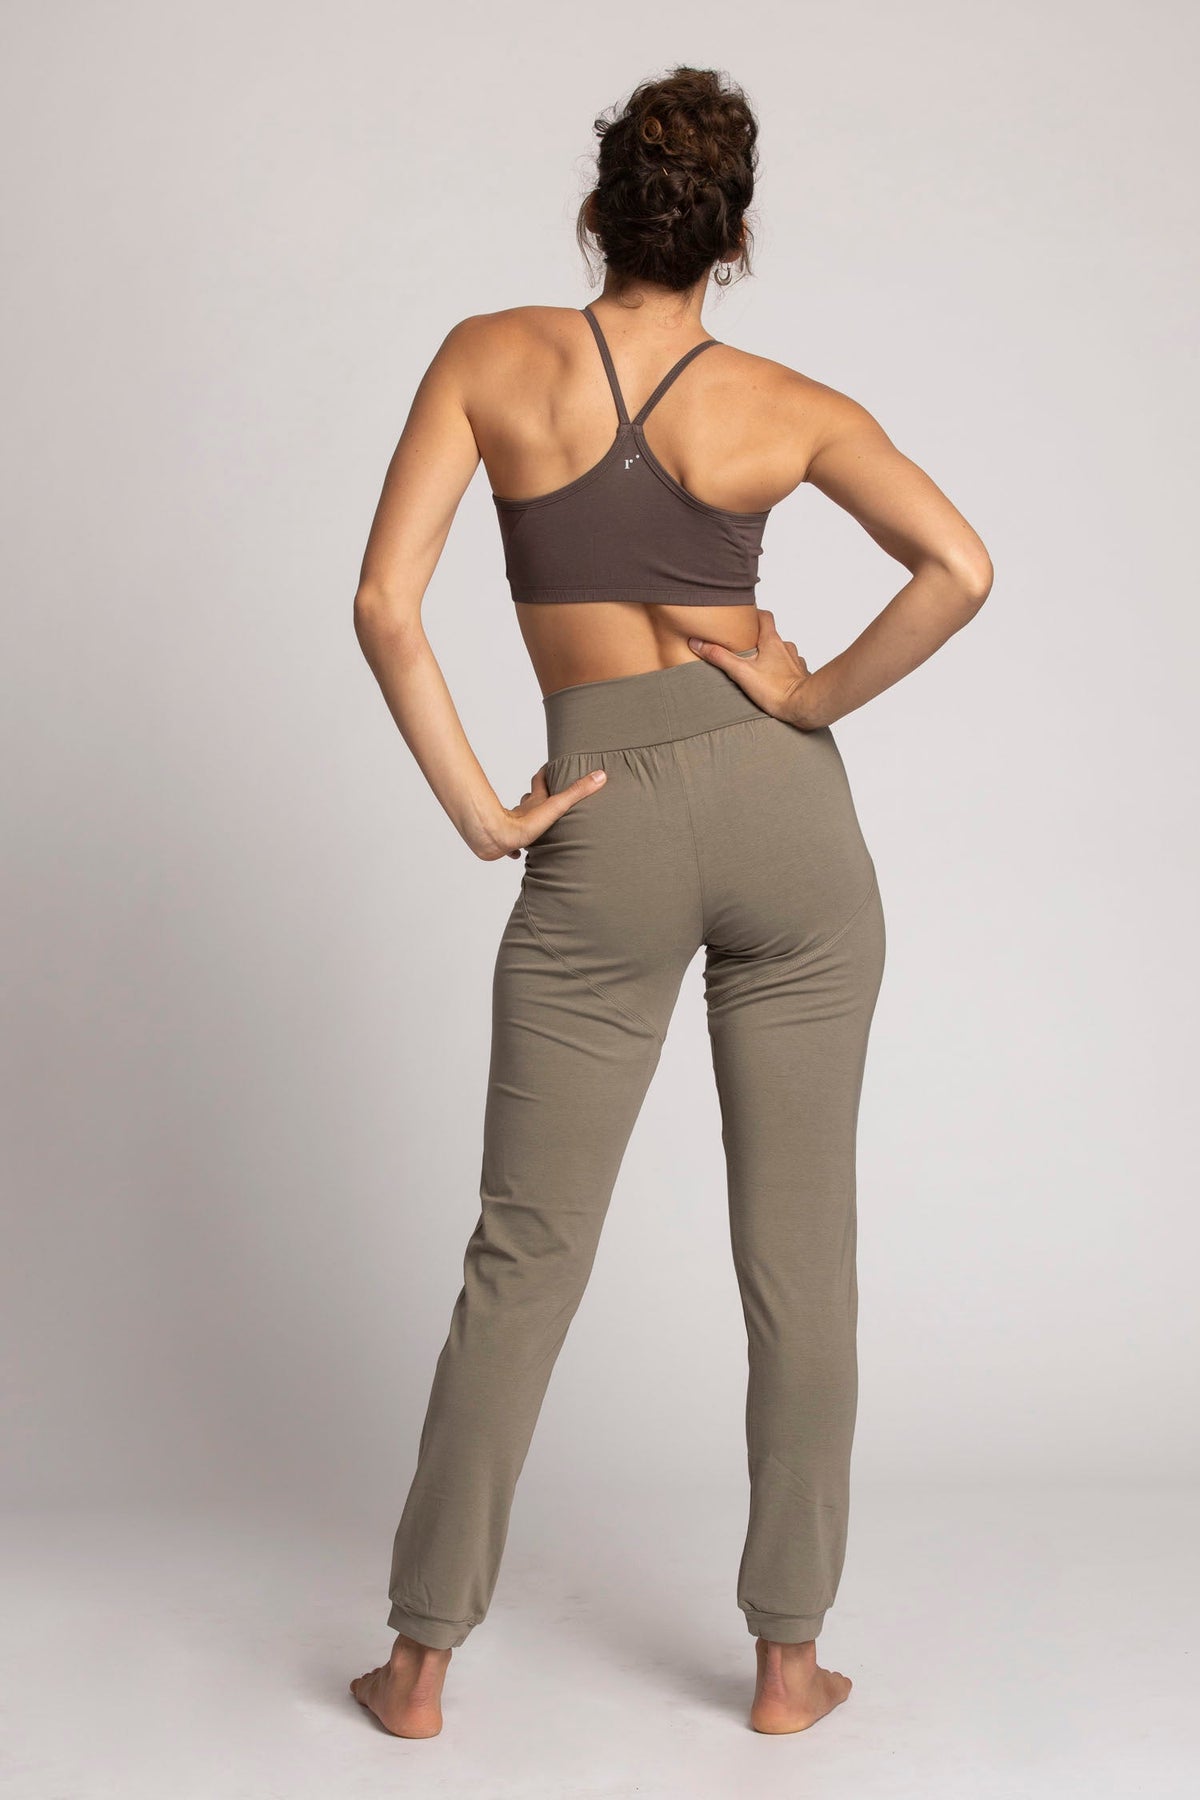 Slouchy Unisex Yoga Pants womens clothing Ripple Yoga Wear sage S 